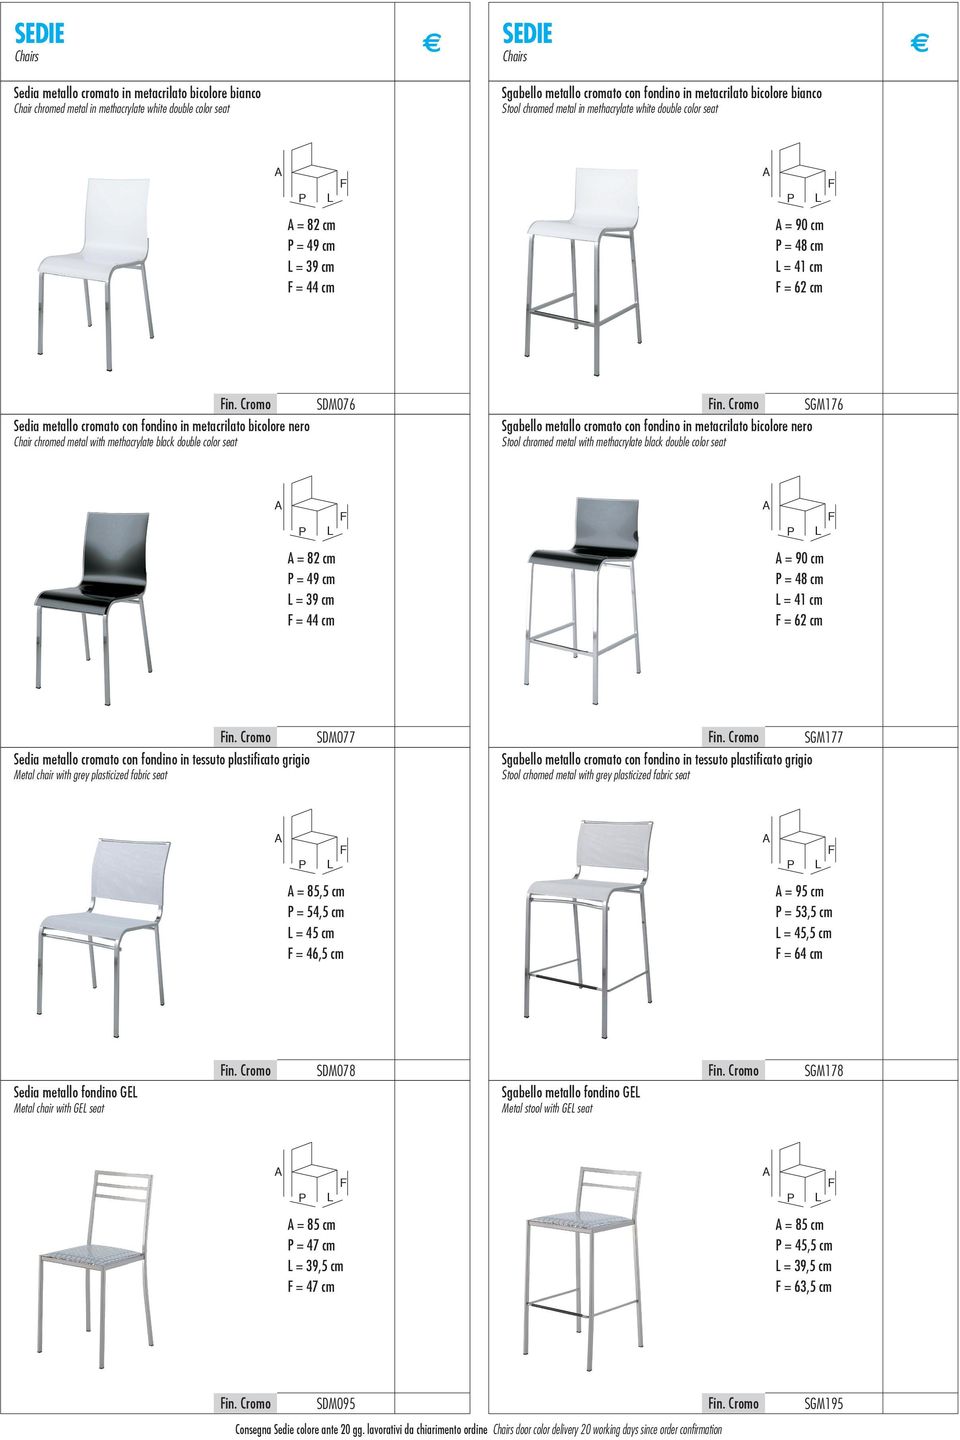 Cromo Sedia metallo cromato con fondino in metacrilato bicolore nero Chair chromed metal with methacrylate black double color seat SDM076 in.